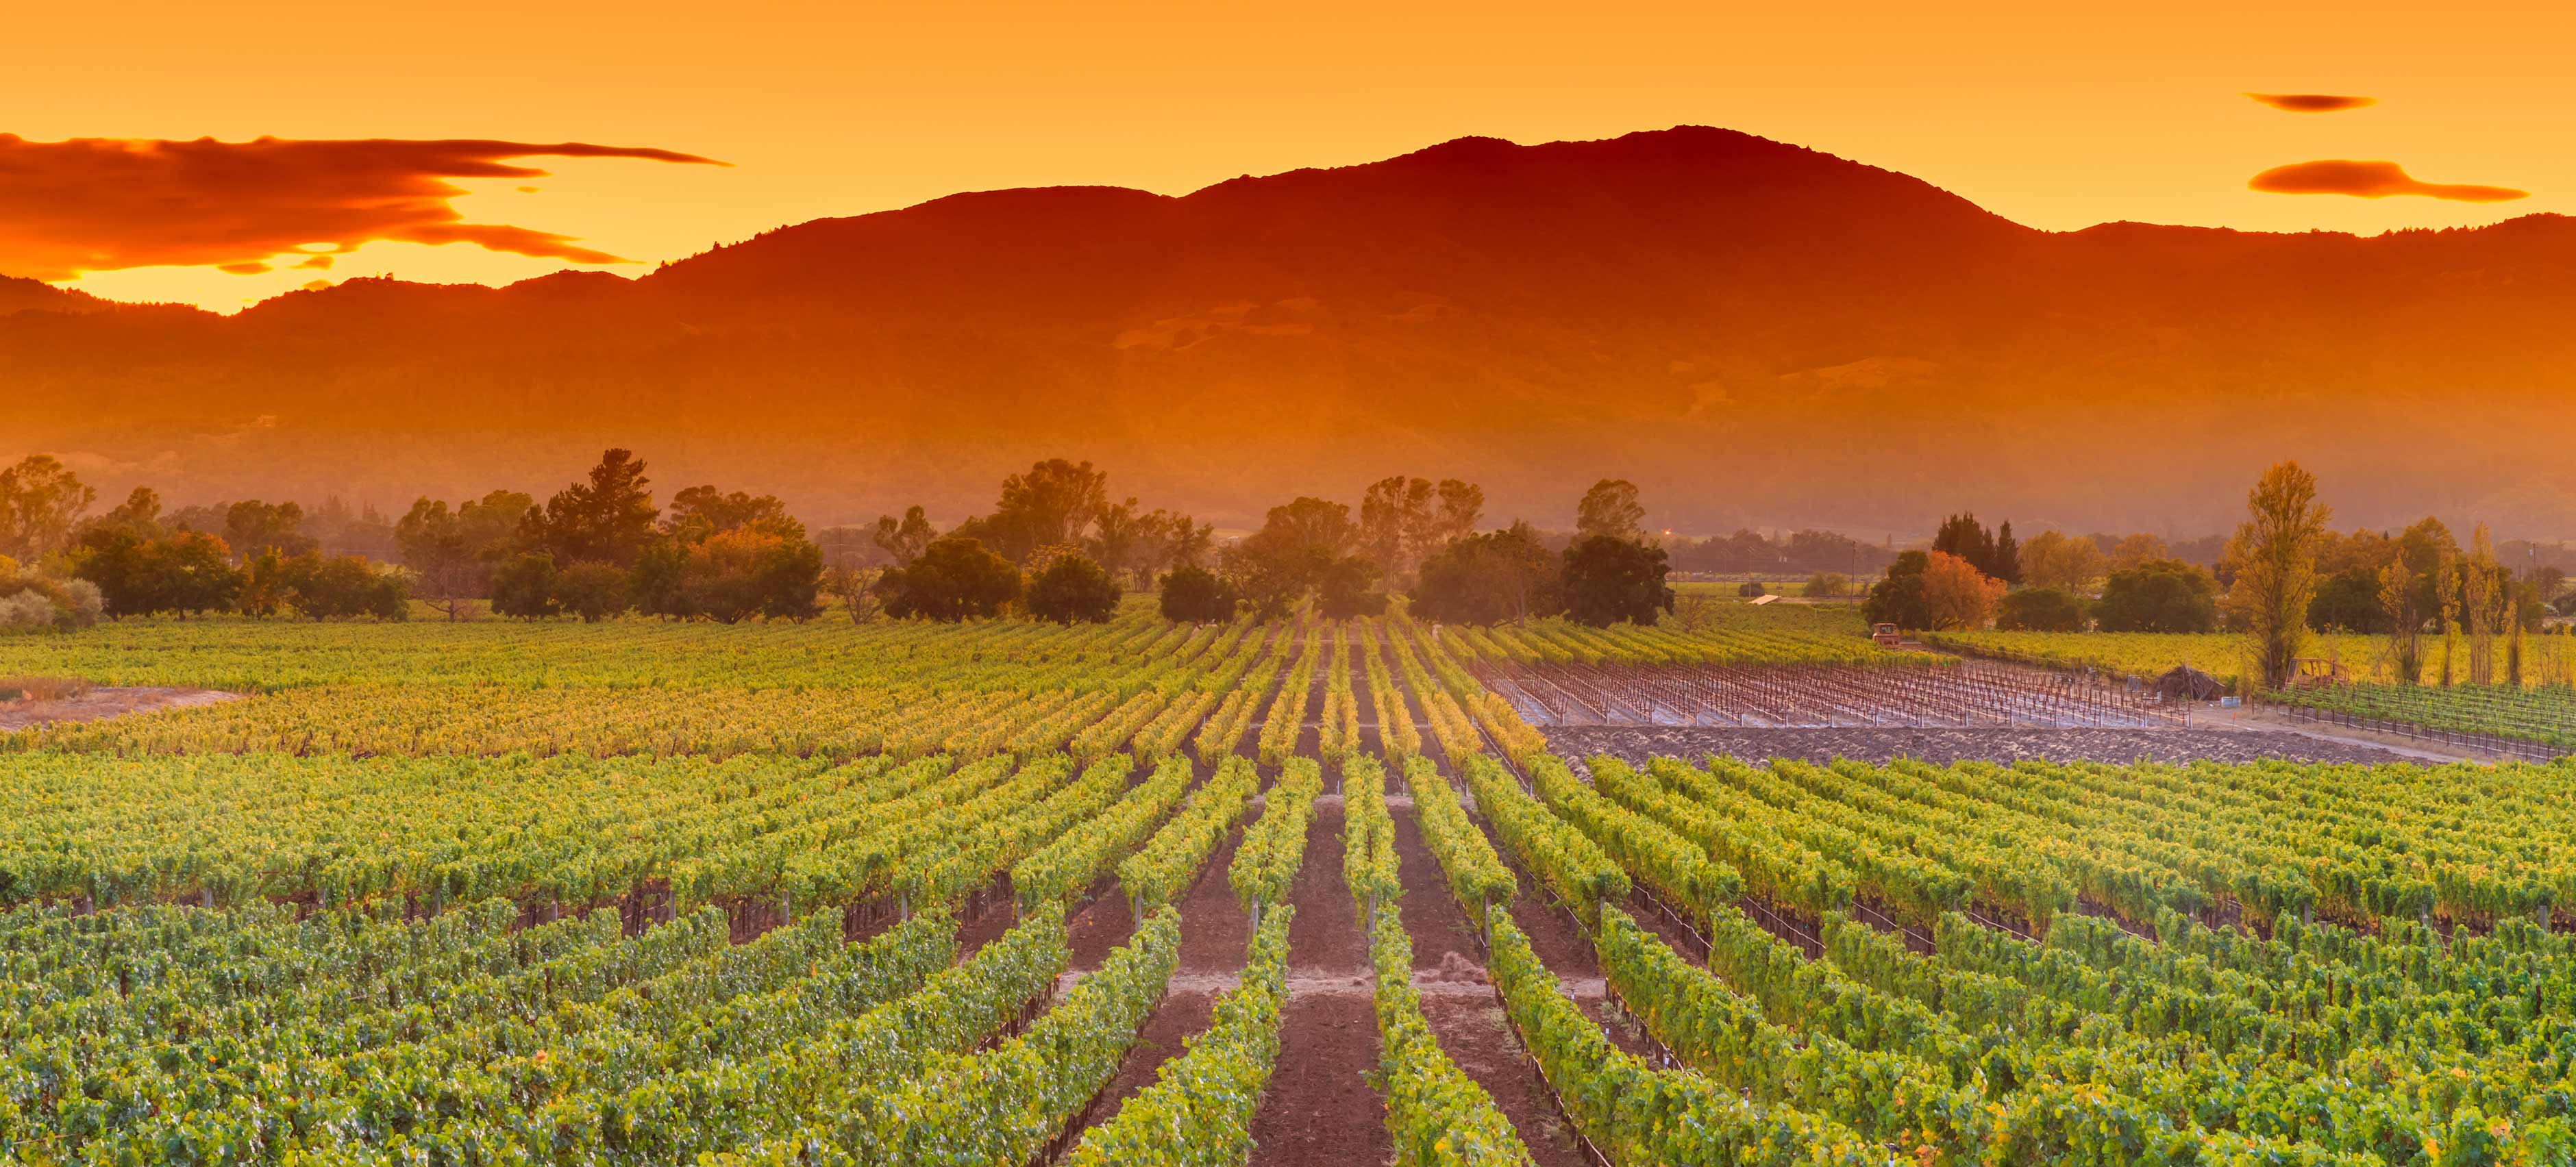 Less traveled, beautiful Wine Countries of California